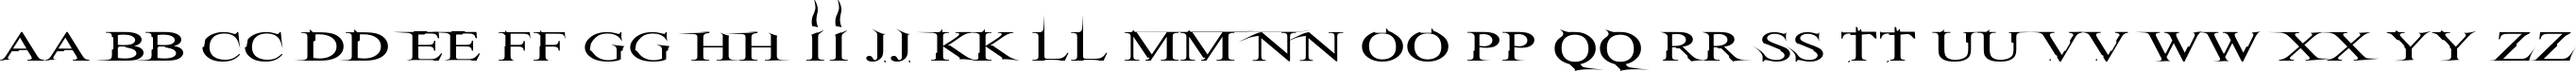 Пример написания английского алфавита шрифтом Hitman